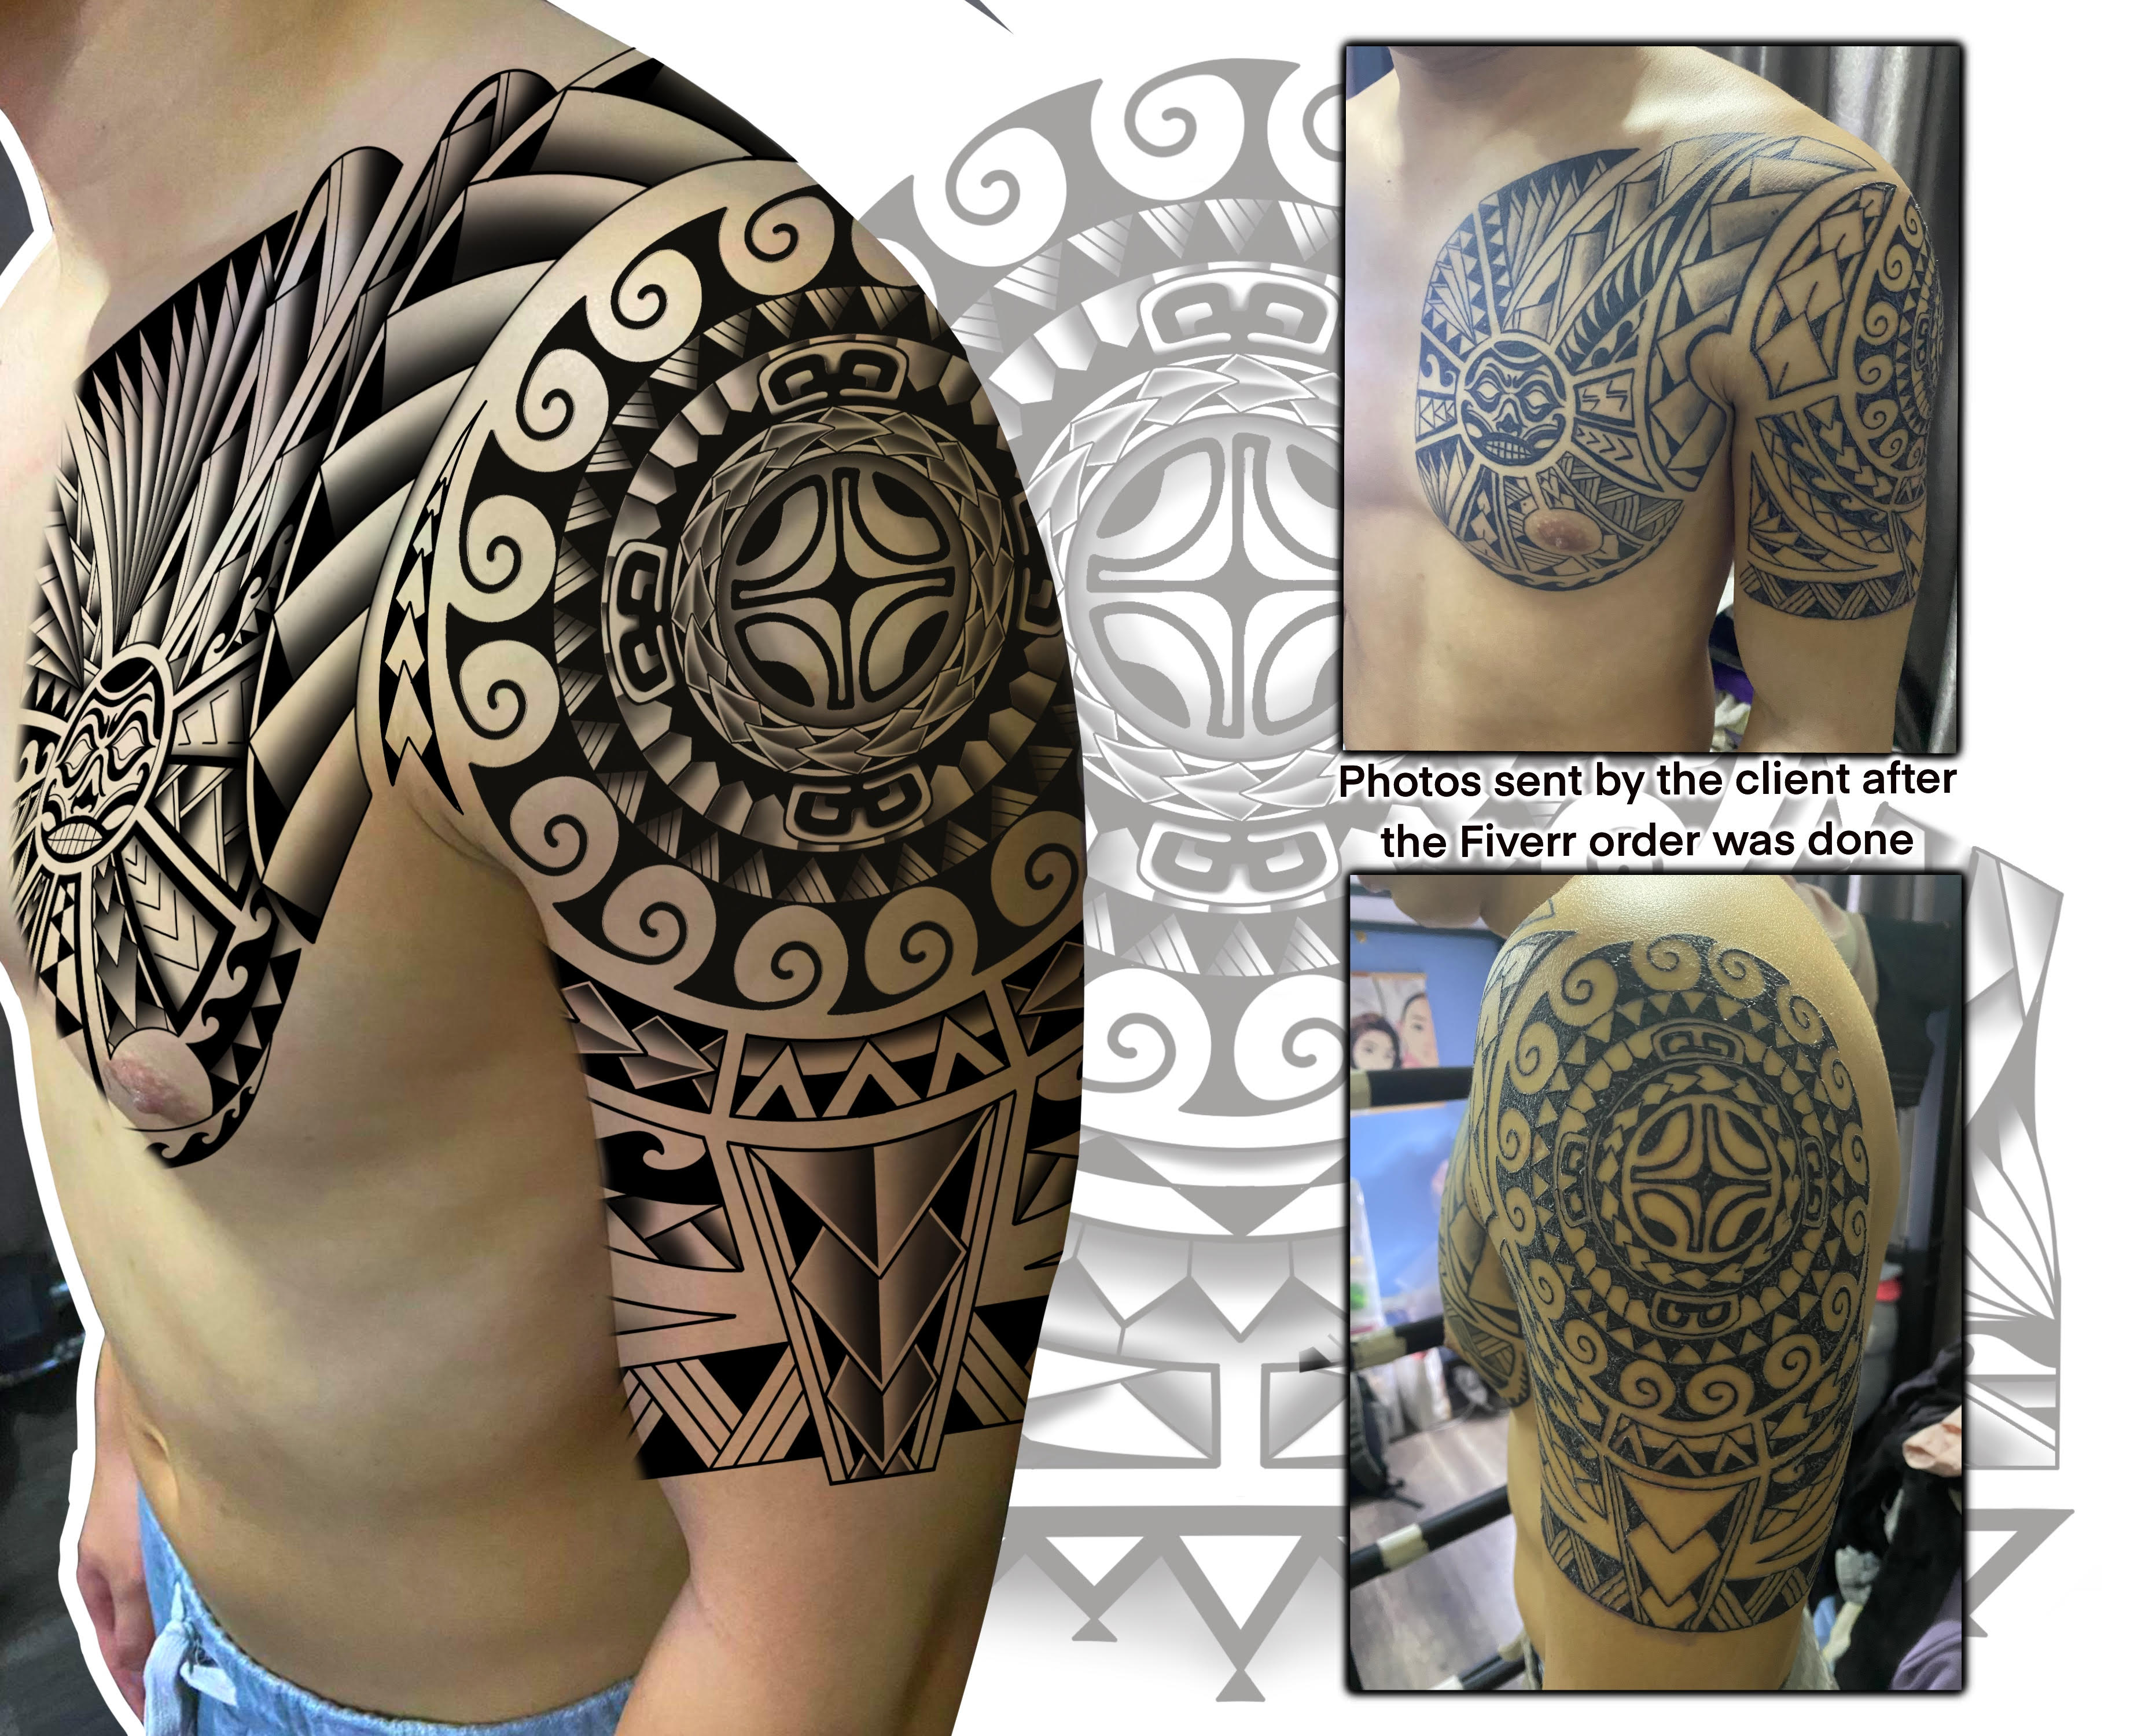 Share 96+ about maori tribal tattoo latest .vn